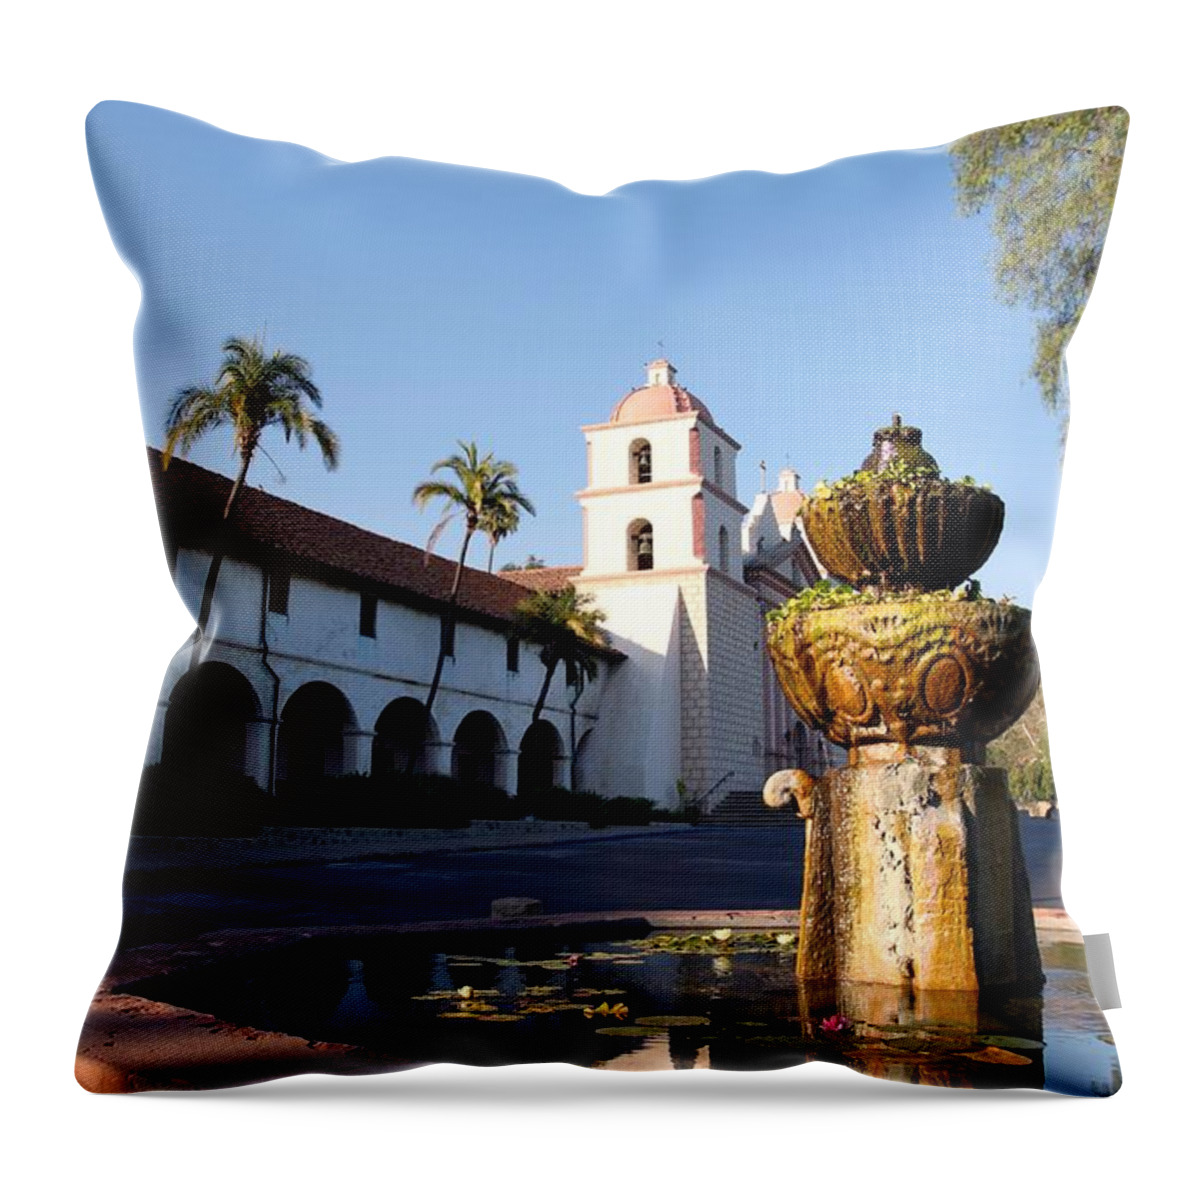 Barbara Throw Pillow featuring the photograph Santa Barbara Mission Fountain #2 by Henrik Lehnerer